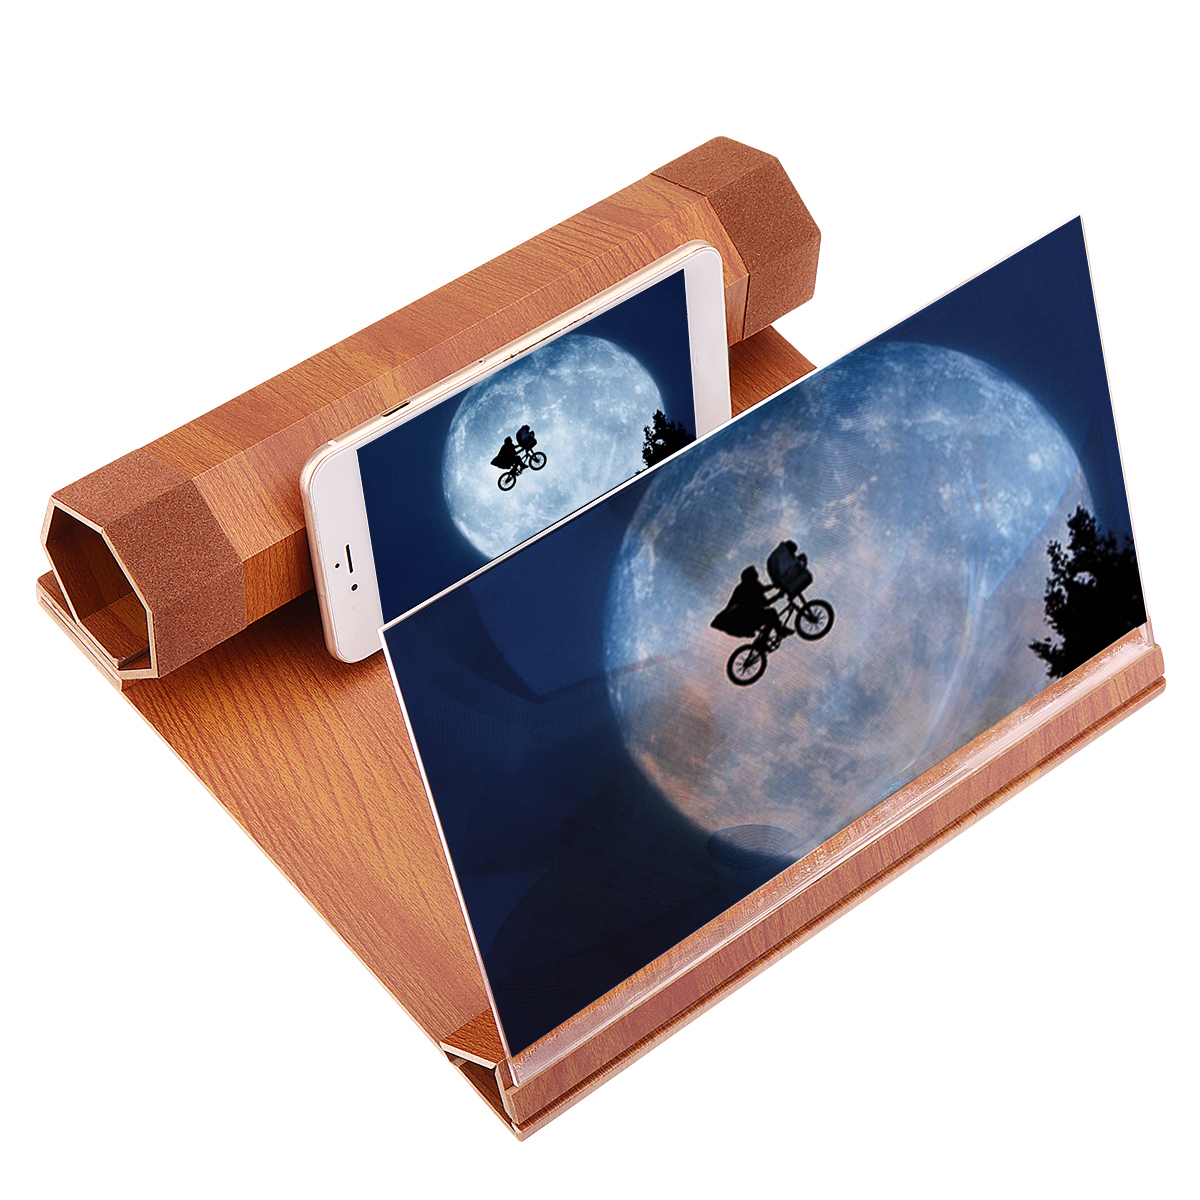 Universal-3D-Phone-Screen-Magnifier-Stereoscopic-Amplifying-12-Inch-Desktop-Wood-Bracket-Phone-Holde-1549589-2